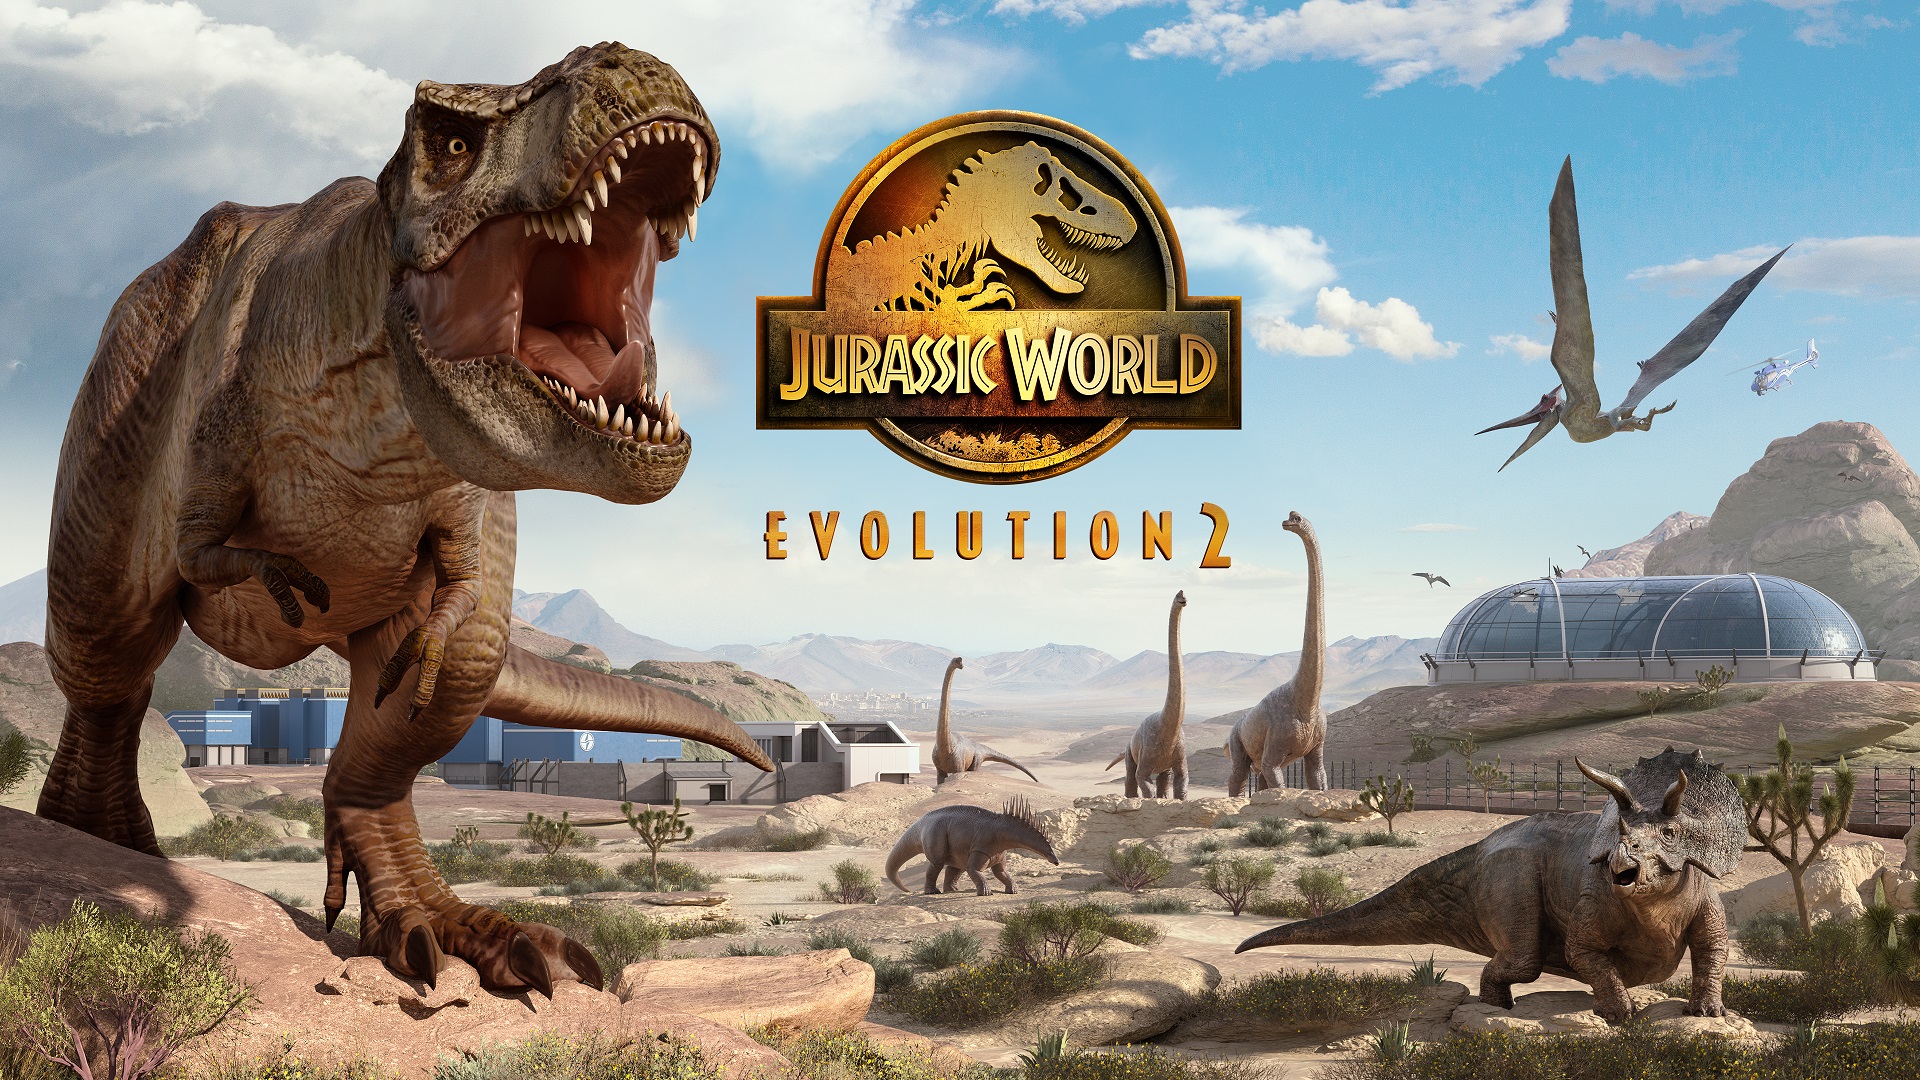 I-Jurassic World Evolution 2 Art Key 1